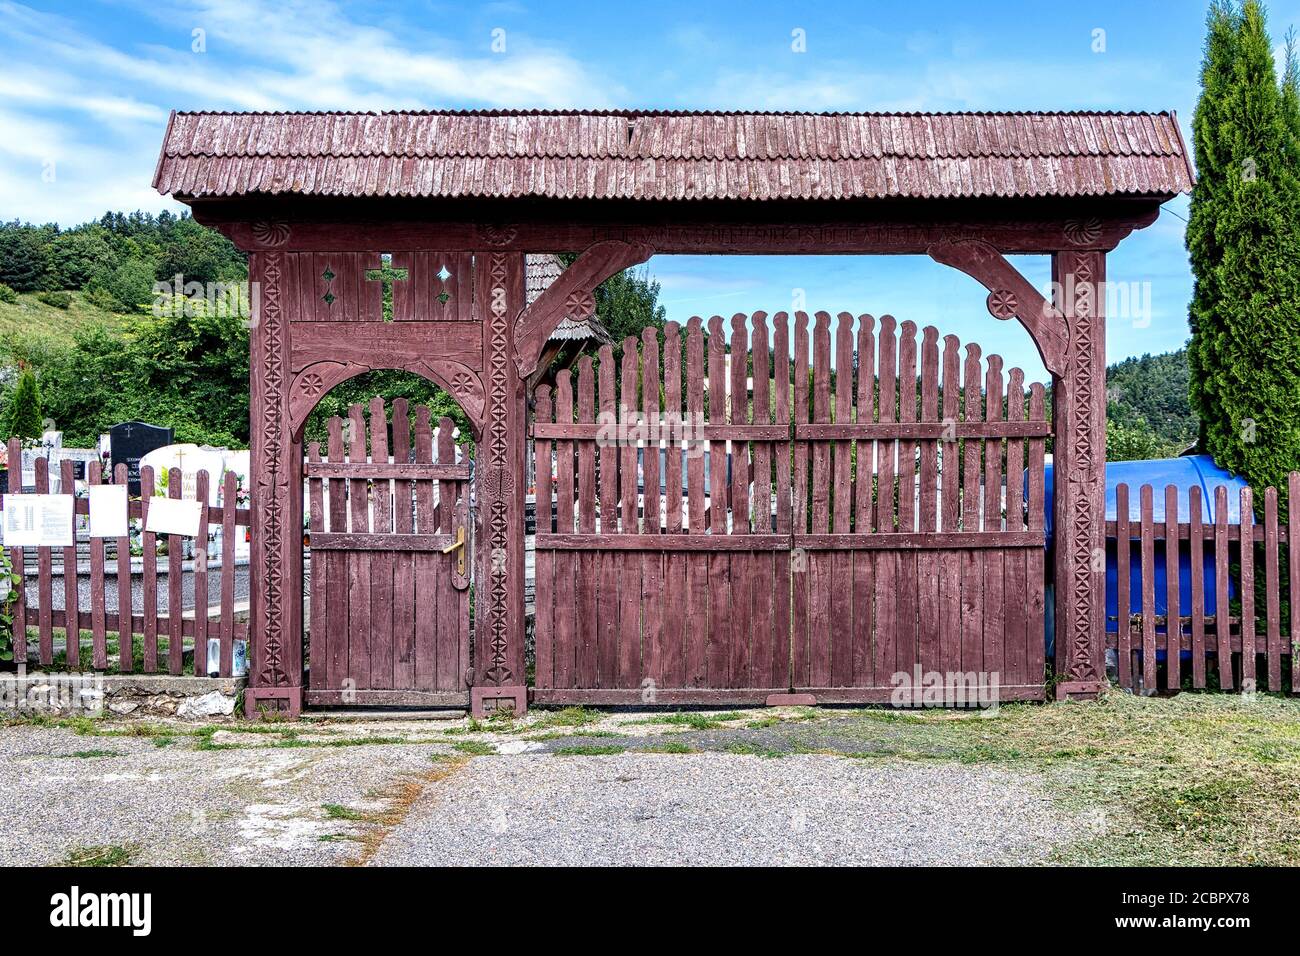 Szekler gate, an ornamental graveyard gate made only of wood Stock Photo